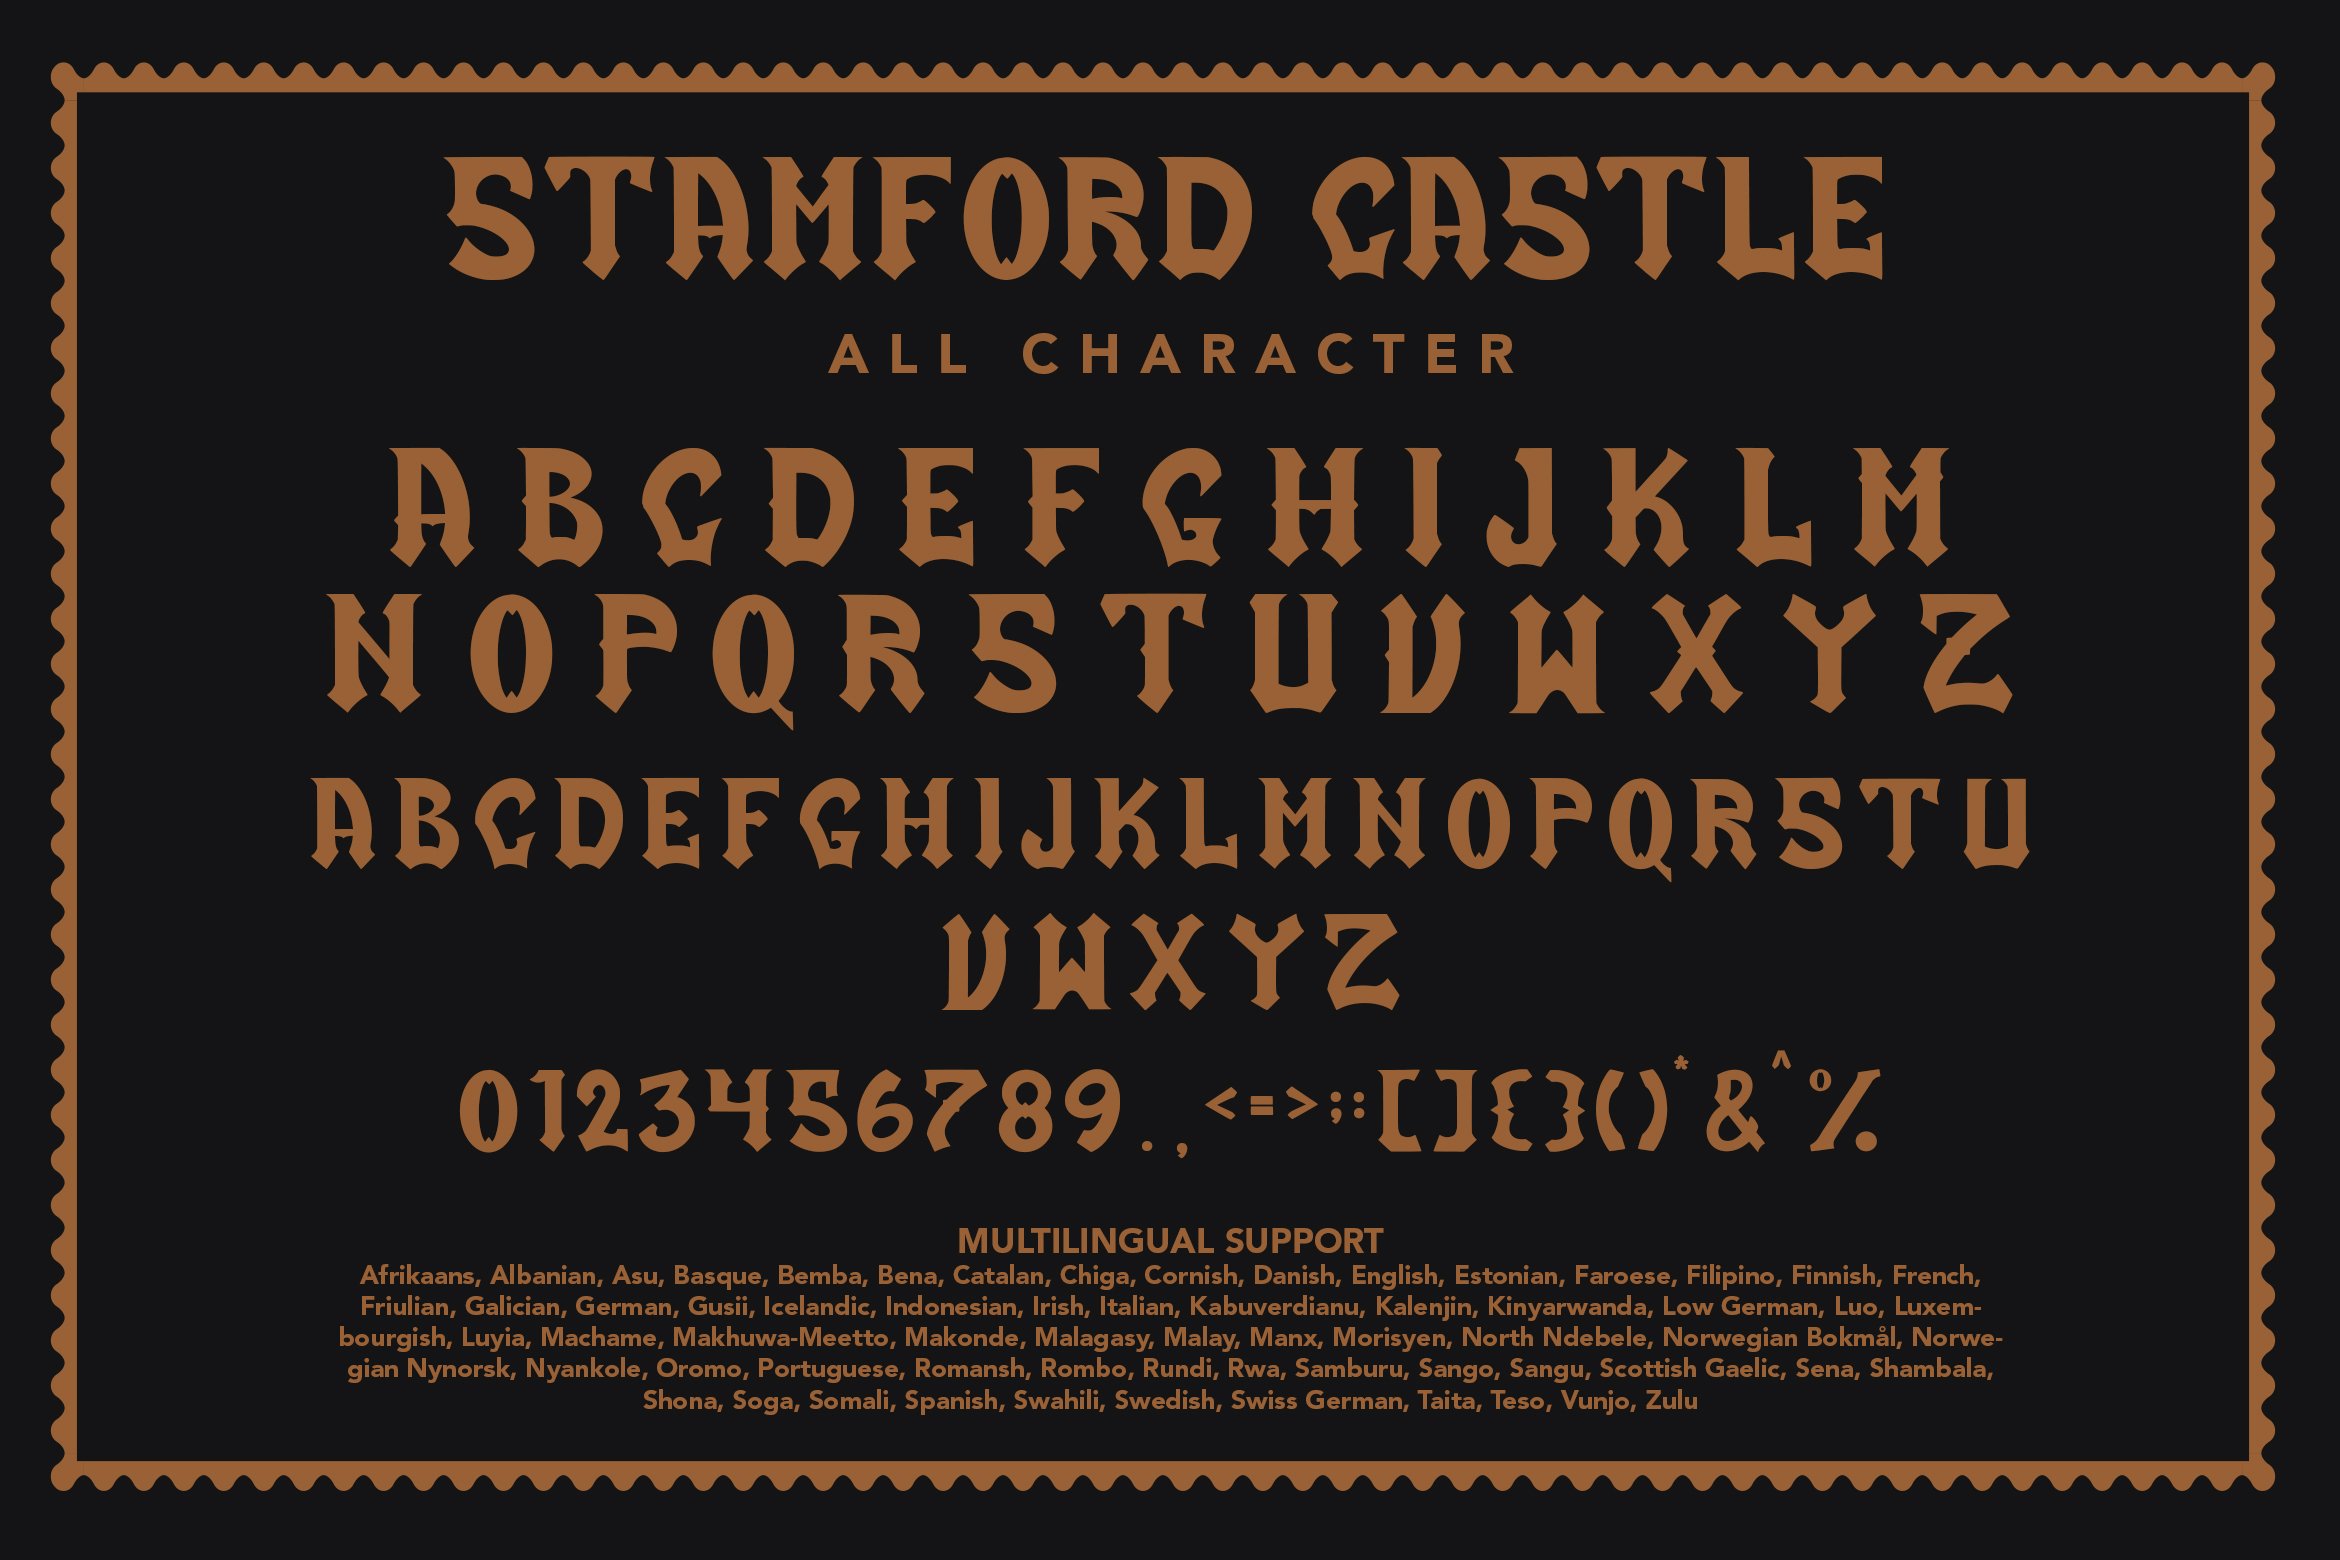 stamford castle 8 663